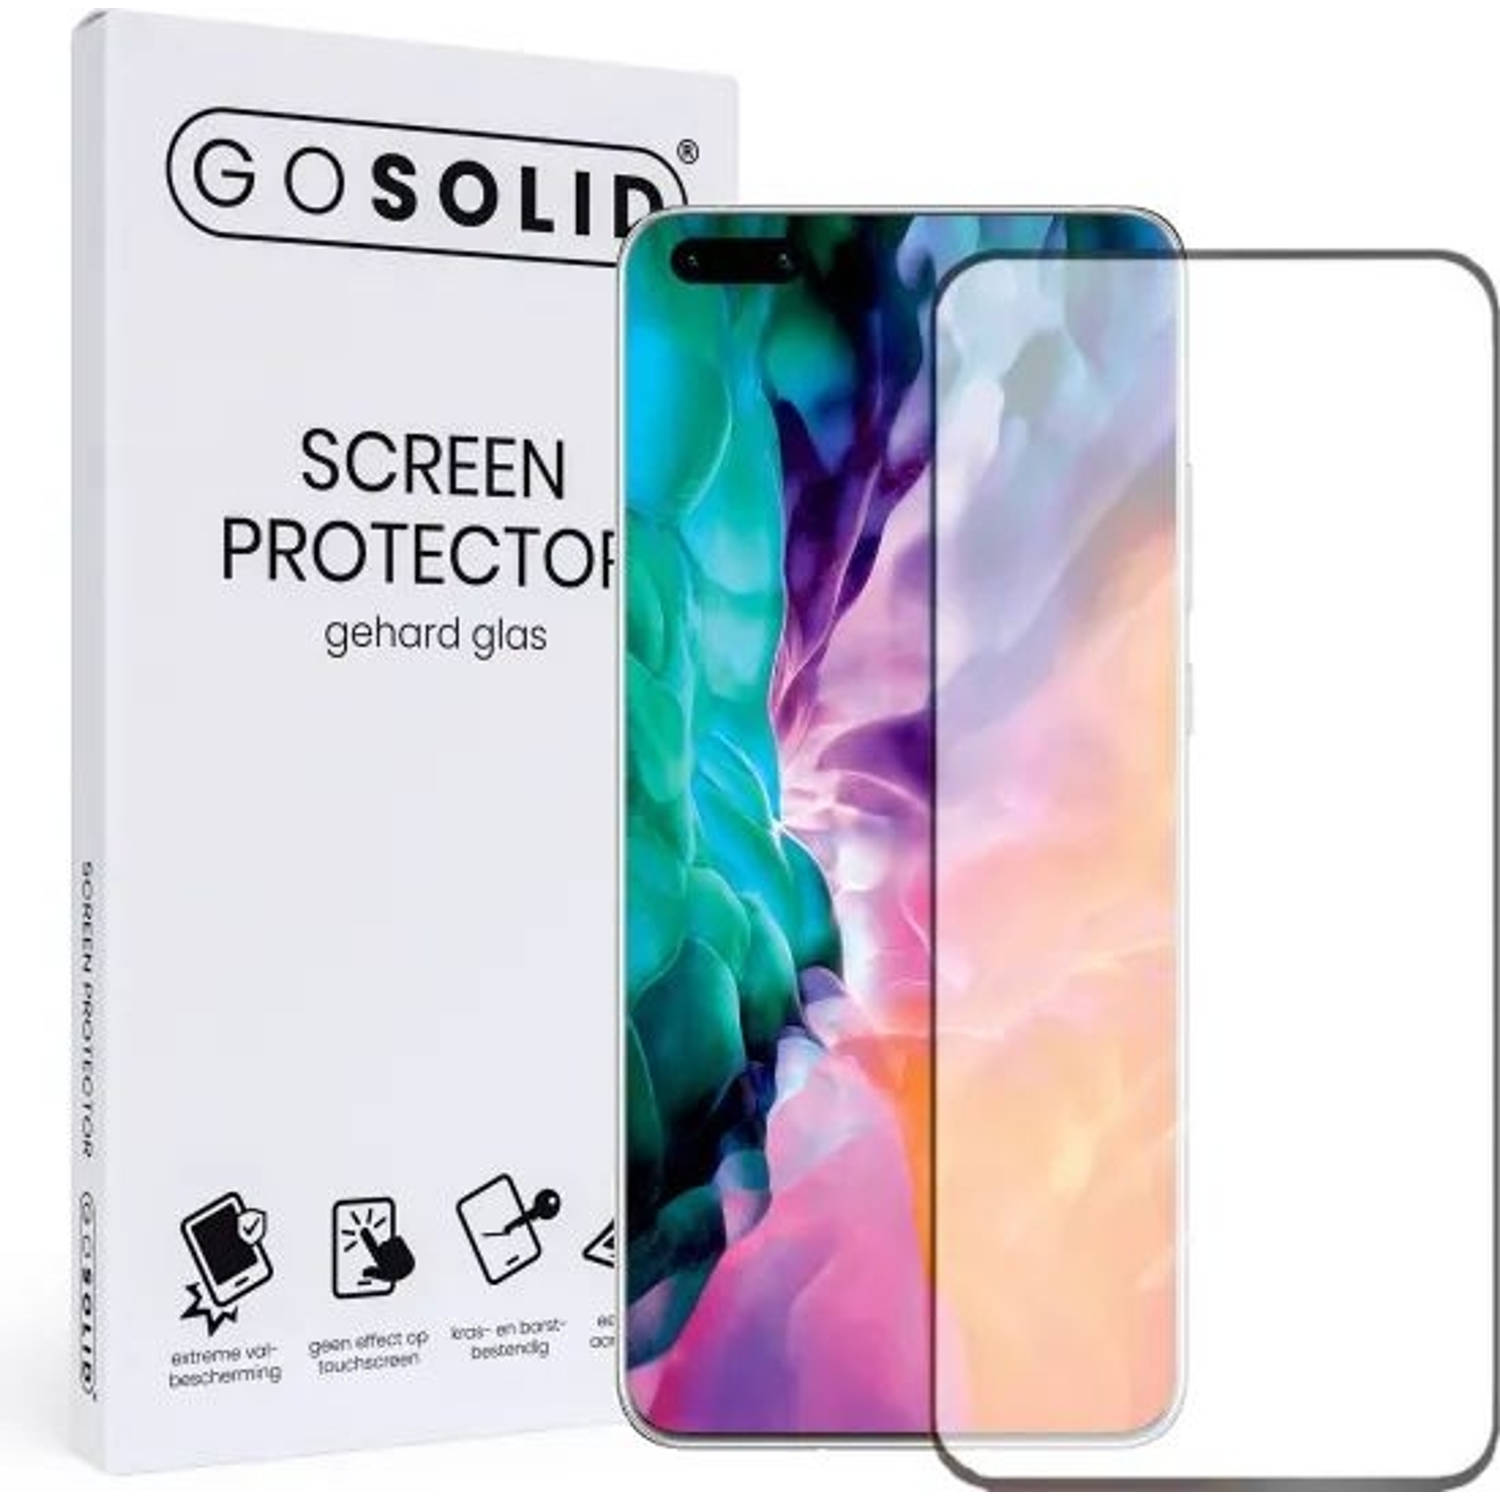 GO SOLID! Screenprotector voor Huawei P40 Pro gehard glas